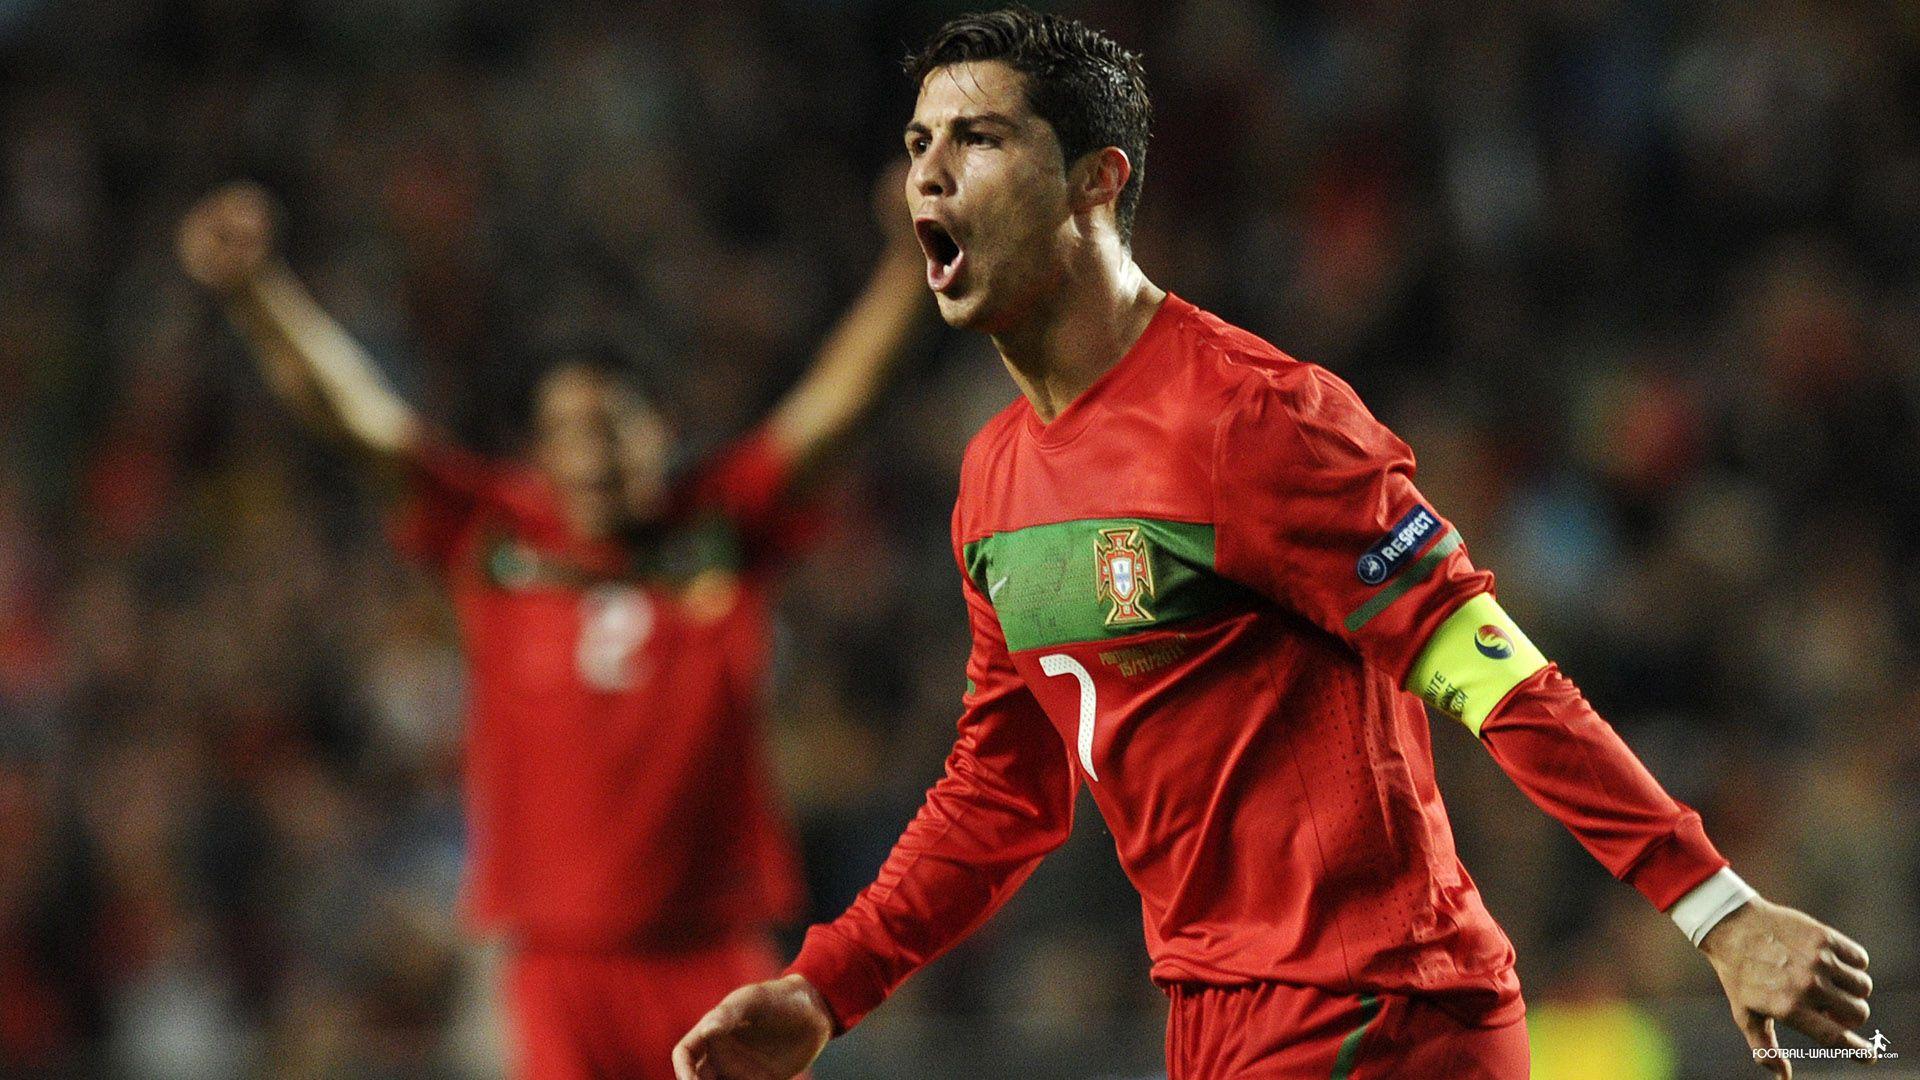 Cristiano Ronaldo Portugal Wallpaper: Players, Teams, Leagues